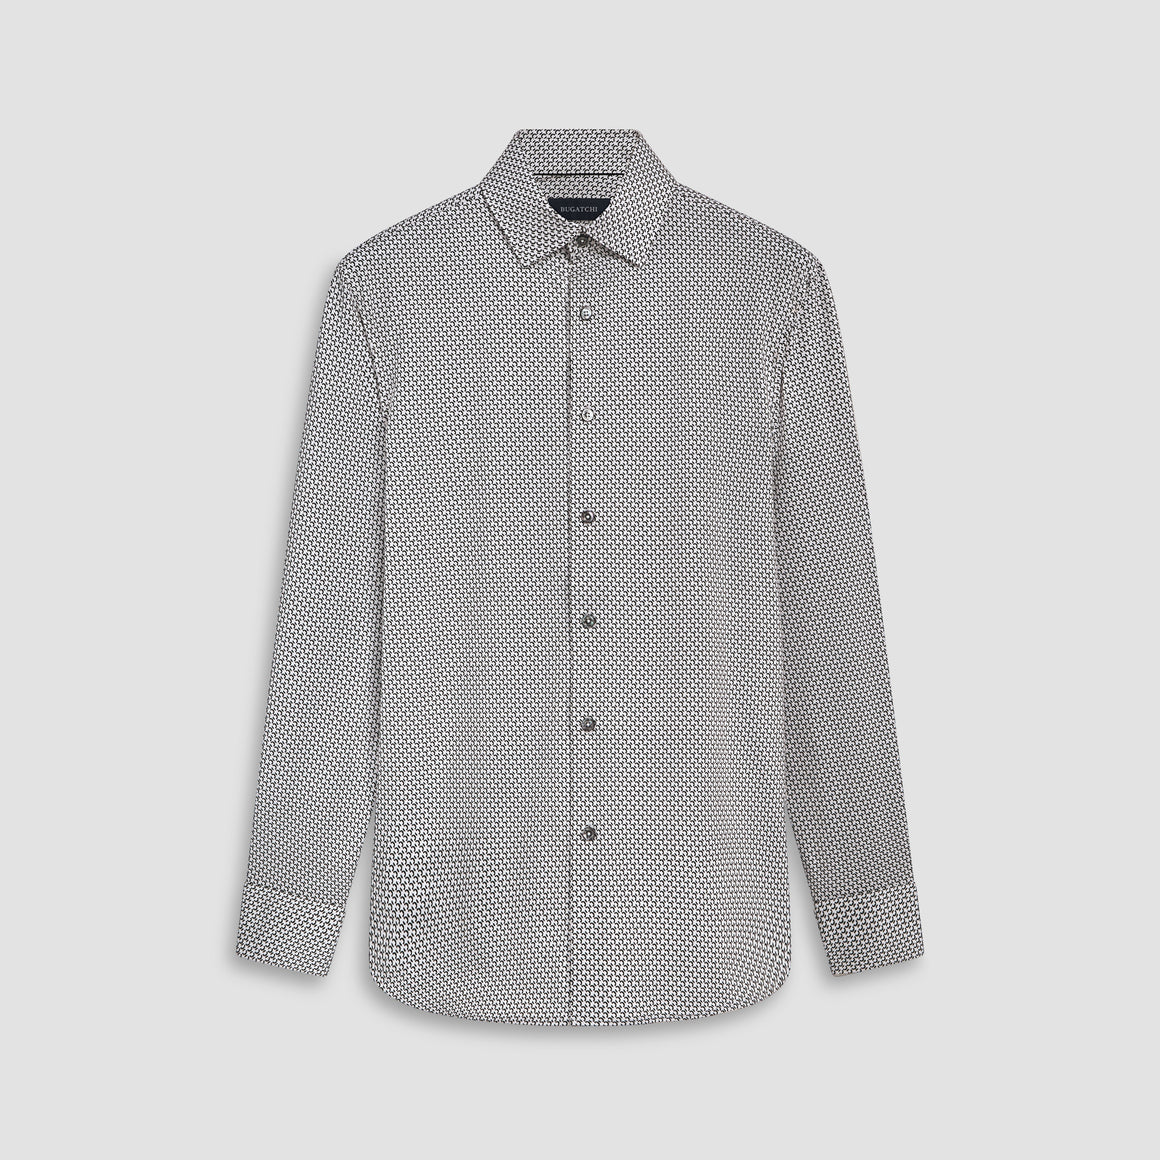 OOOHCotton James Long Sleeve Shirt Geometric White